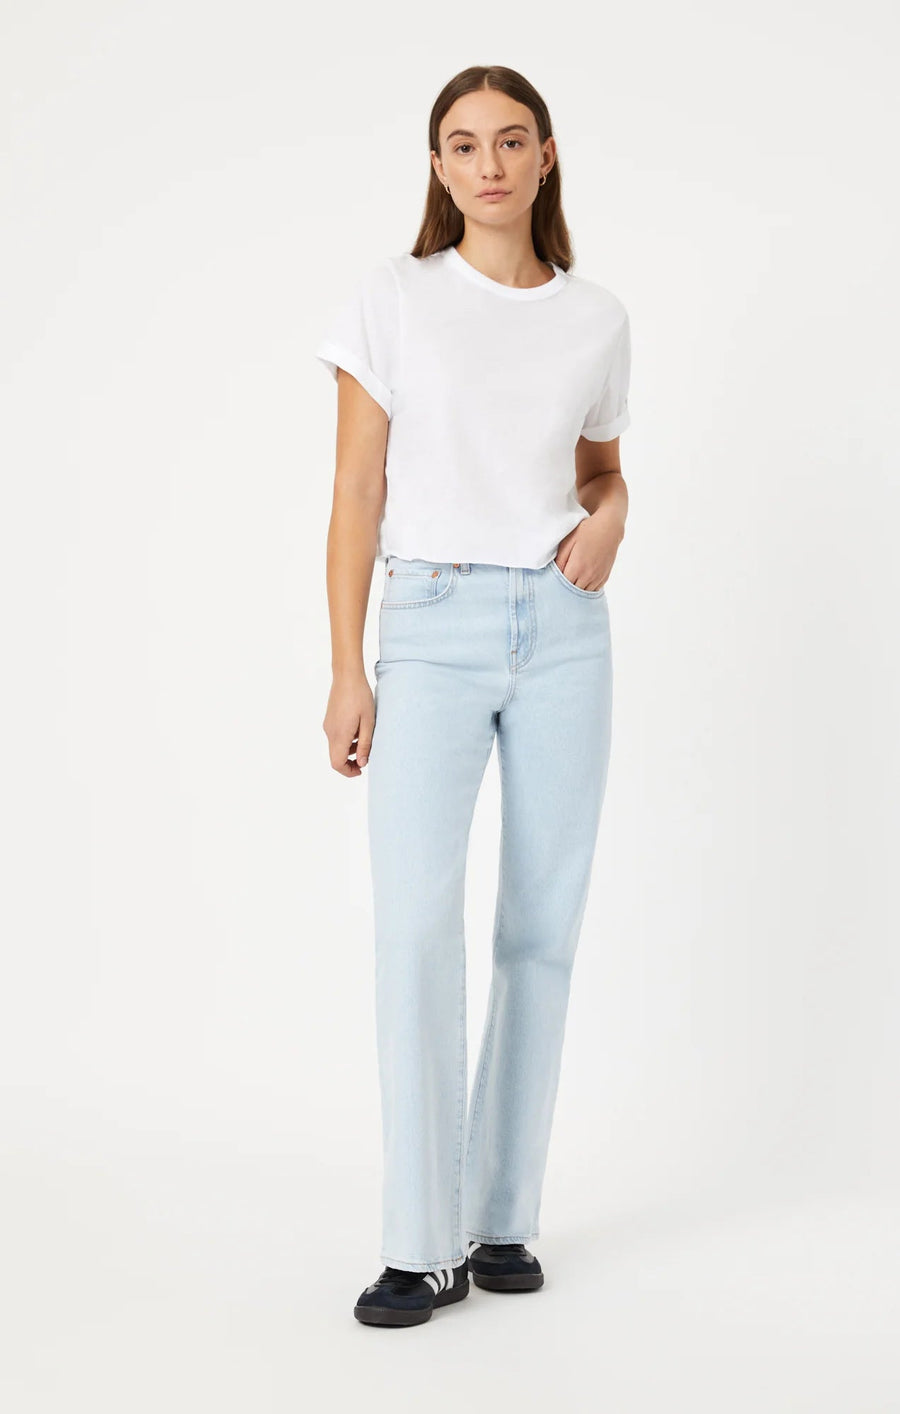 Short Sleeve Crop T-Shirt - White - Blue Sky Fashions & Lingerie